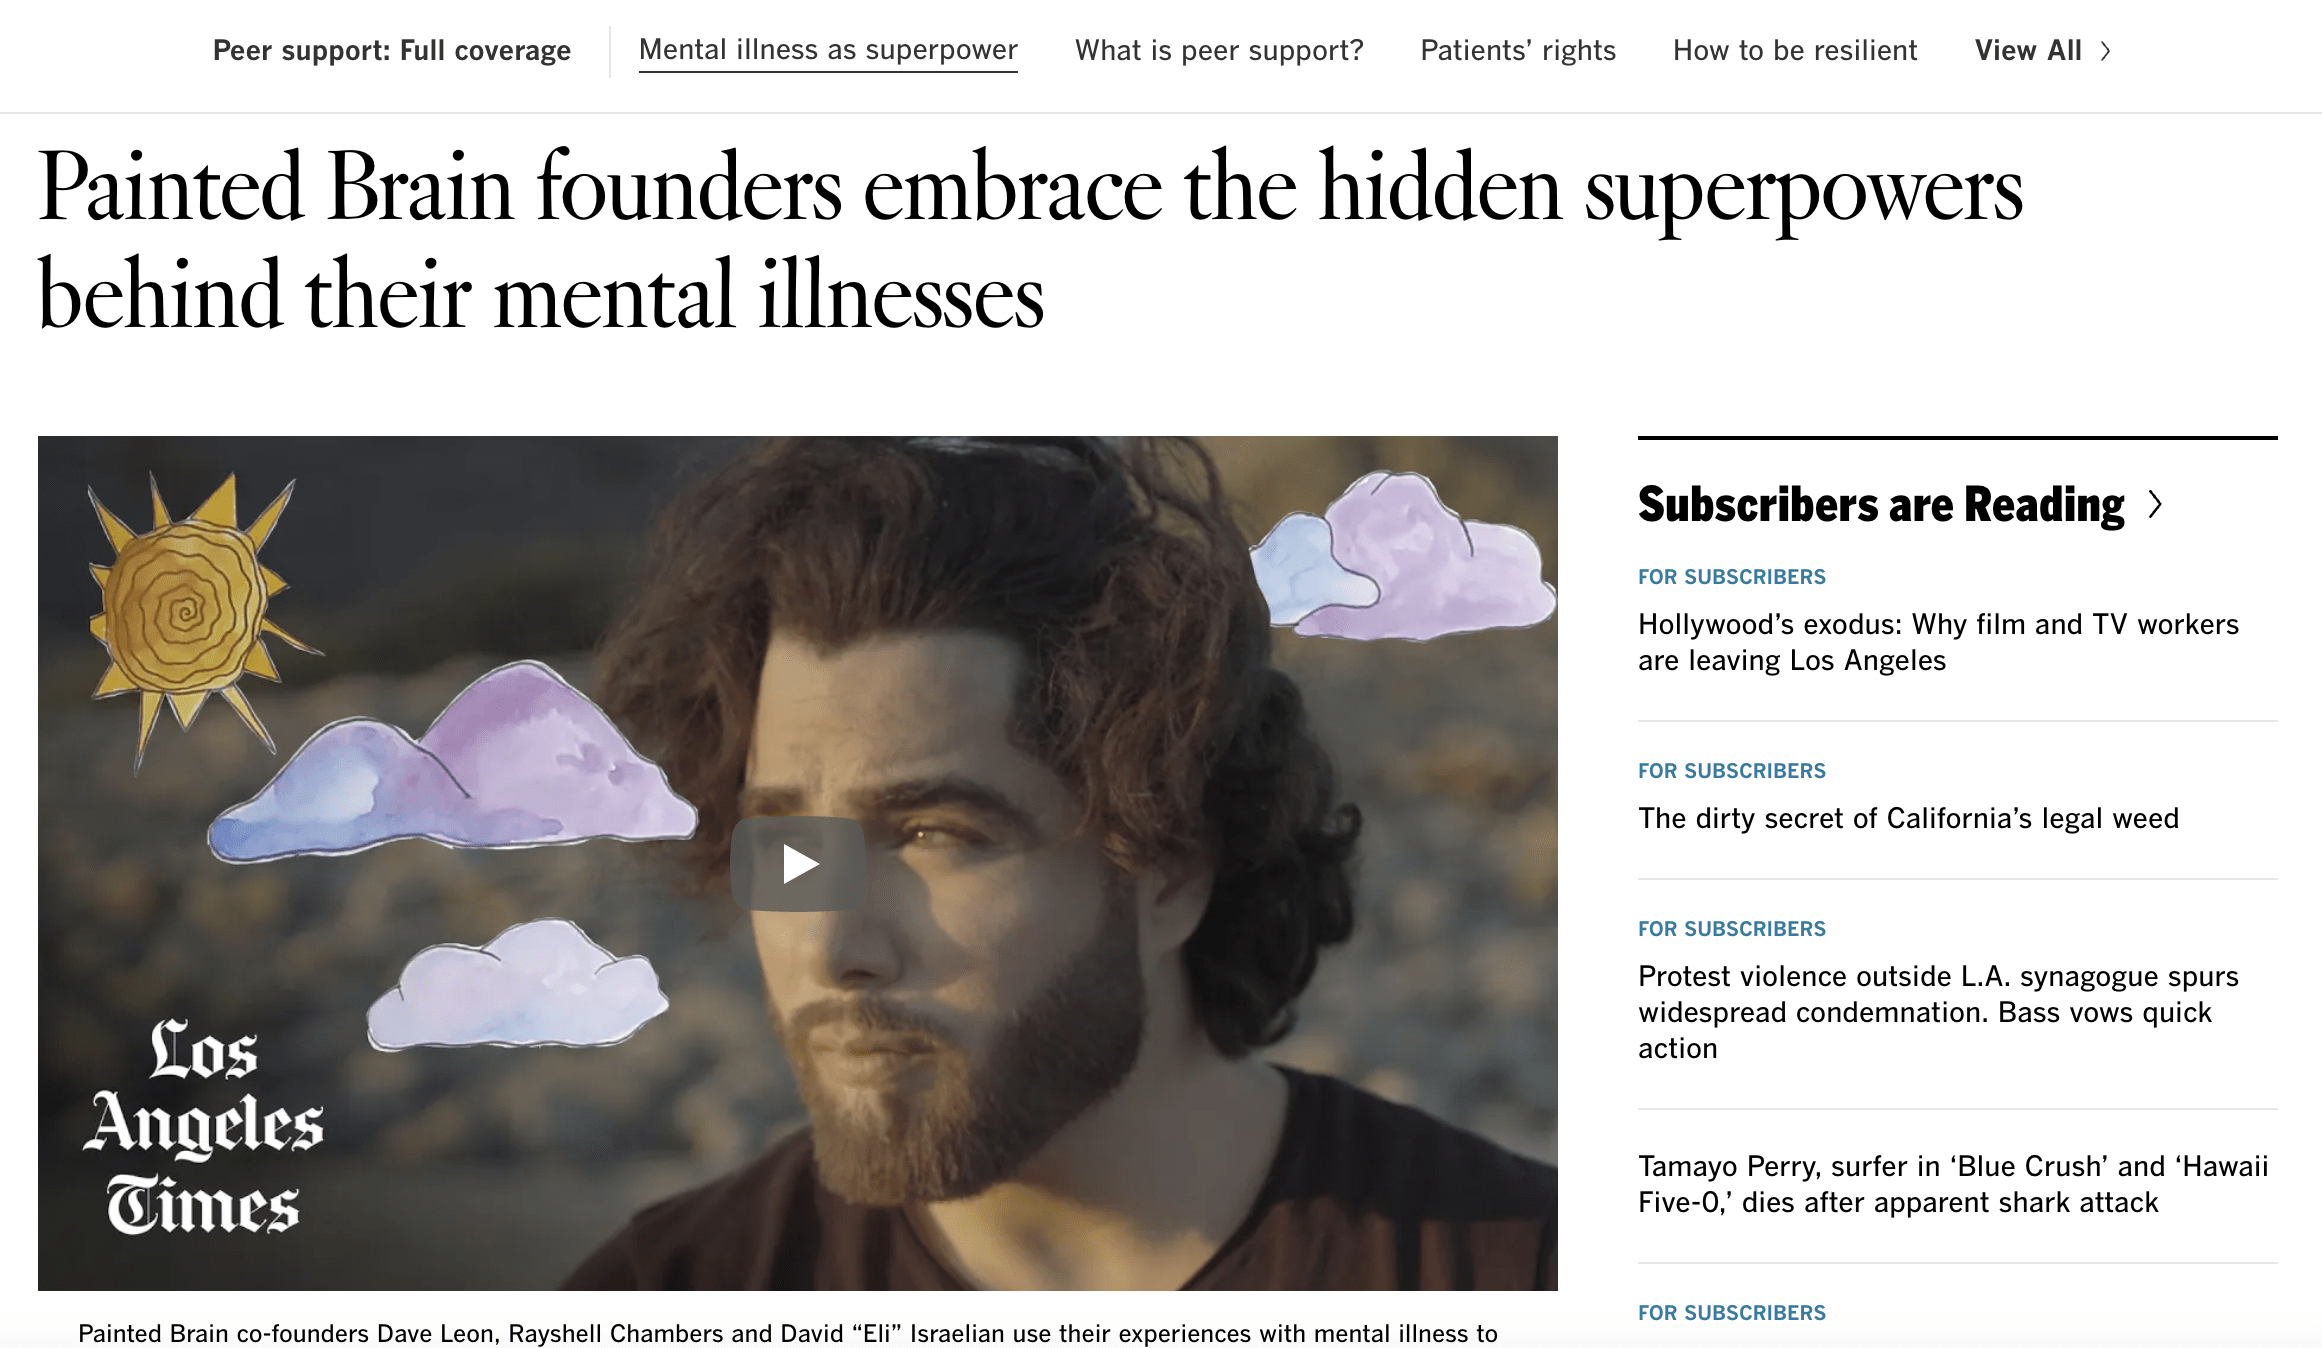 LA Times Article featuring Painted Brain cofounder David Israelian